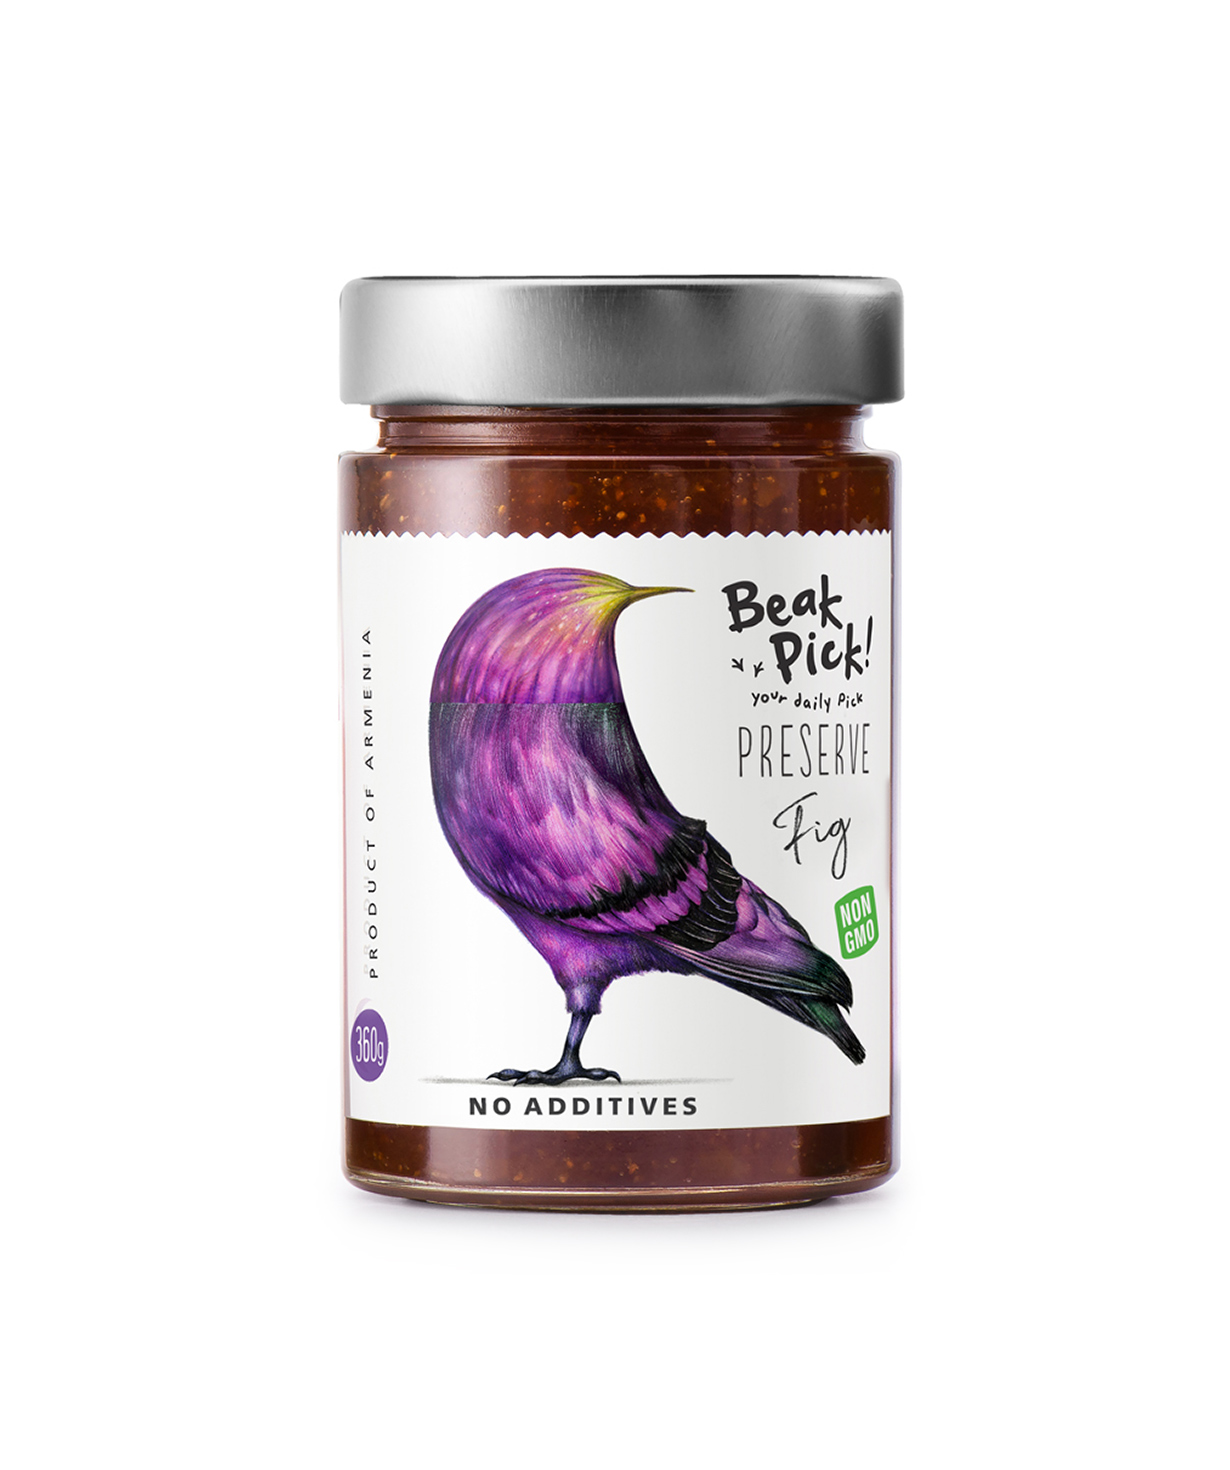 Collection of jams `Beak Pick!` 3 pieces №2